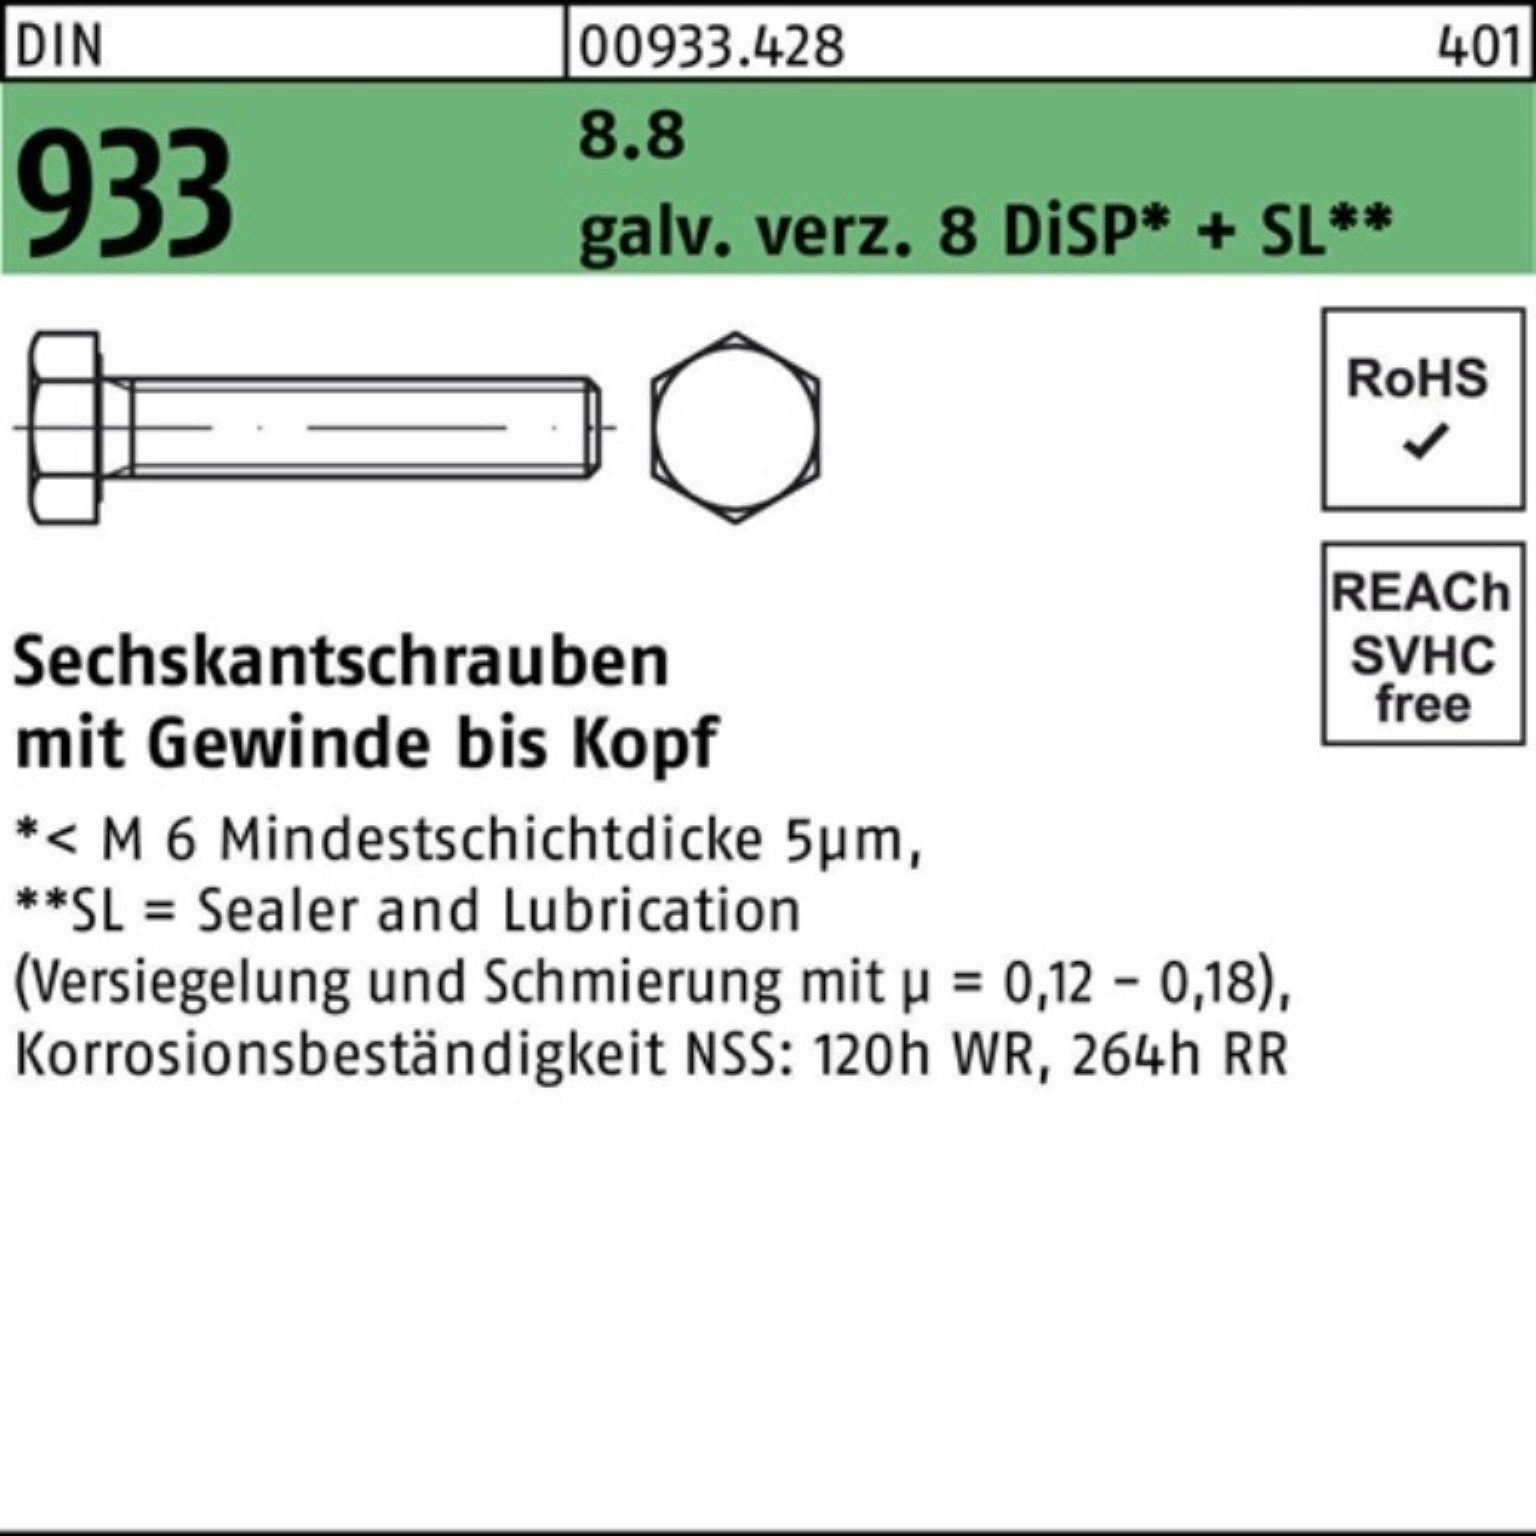 Reyher Sechskantschraube 100er Pack Sechskantschraube DIN 933 VG M16x 70 8.8 gal Zn 8 DiSP + SL